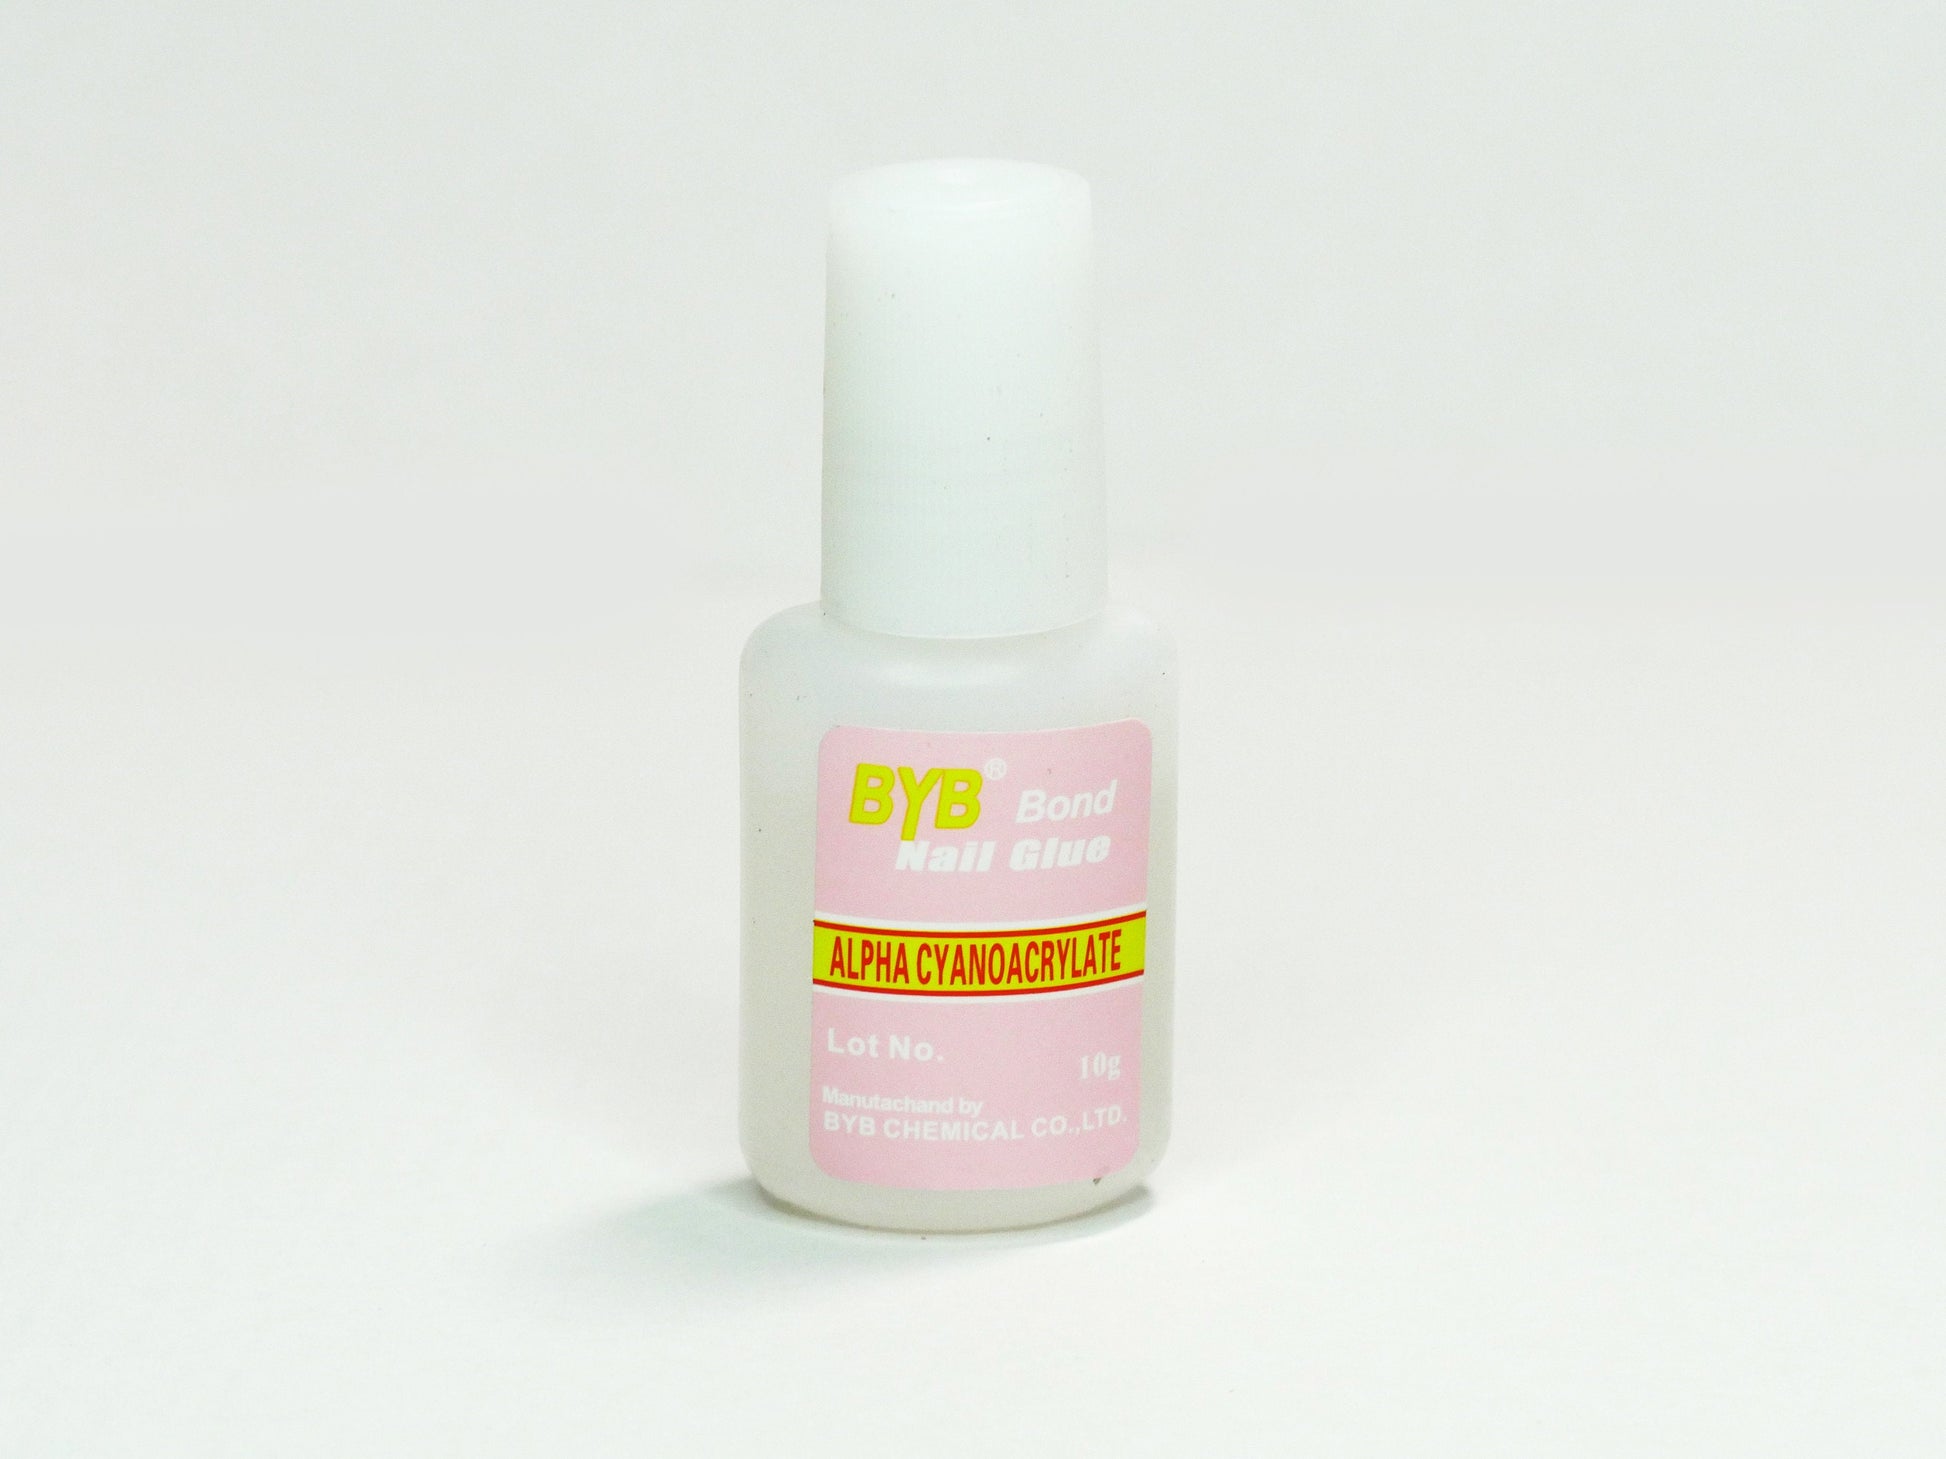 Fast Dry 10g Nail Glue with Brush Nail Bond Acrylic Glue Adhesive, Perfect for False Acrylic Nail Art, Glitter,Gems, Nail Tip Applications